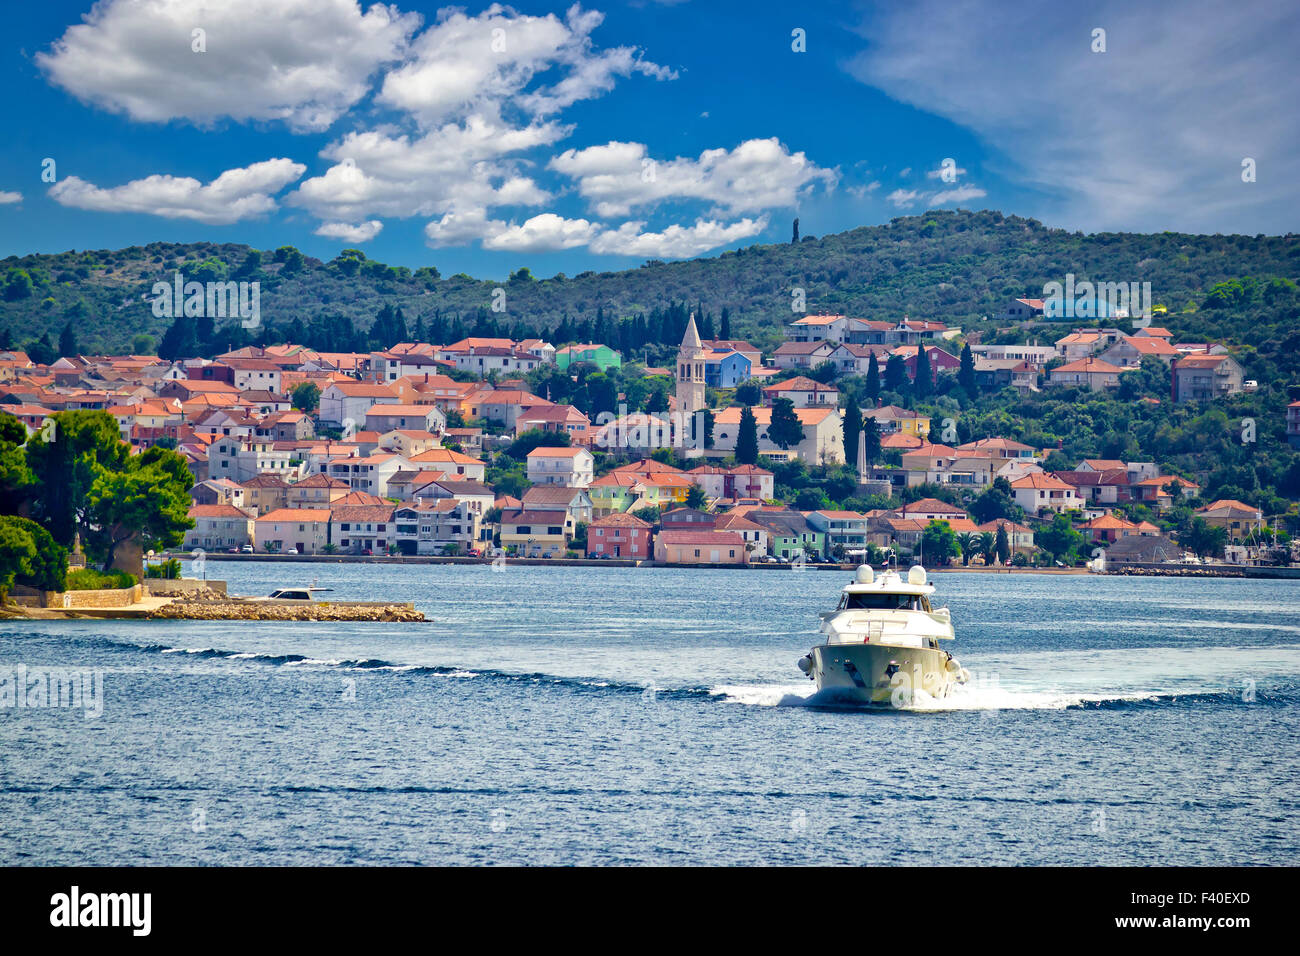 Island of Ugljan yachting destination Stock Photo